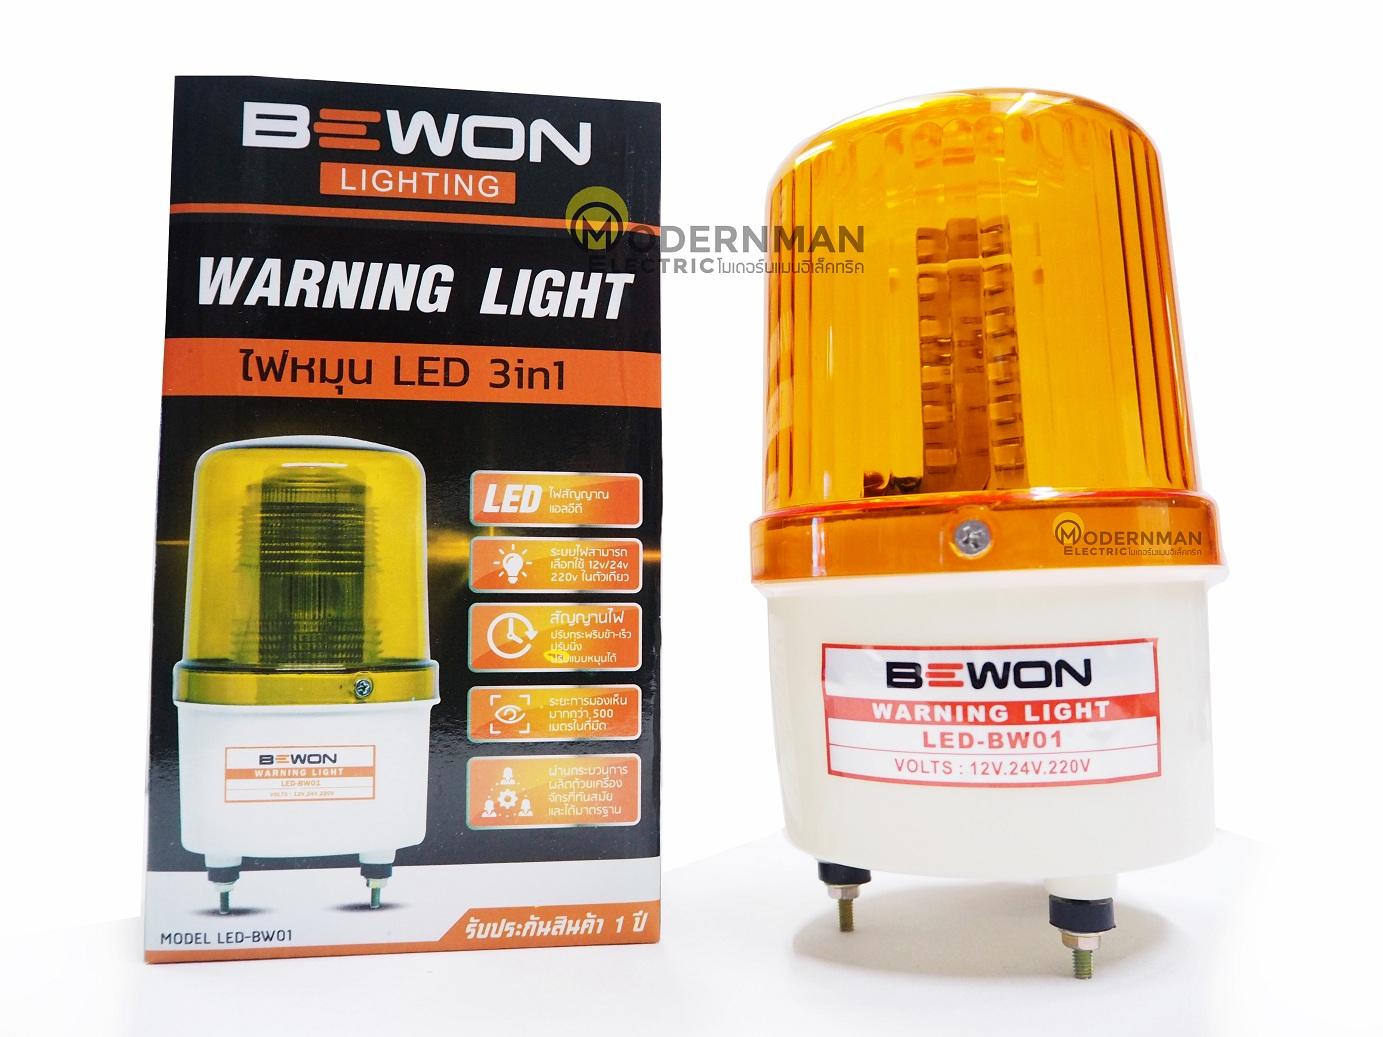 BEWON ไซเรน LED สีเหลือง 3IN1 เลือกใช้ระบบไฟ 220V 24V 12V ได้ในตัวเดียว ไฟฉุกเฉิน ขอทาง สัญญาณ ไฟหมุน ไฟไซเรน siren